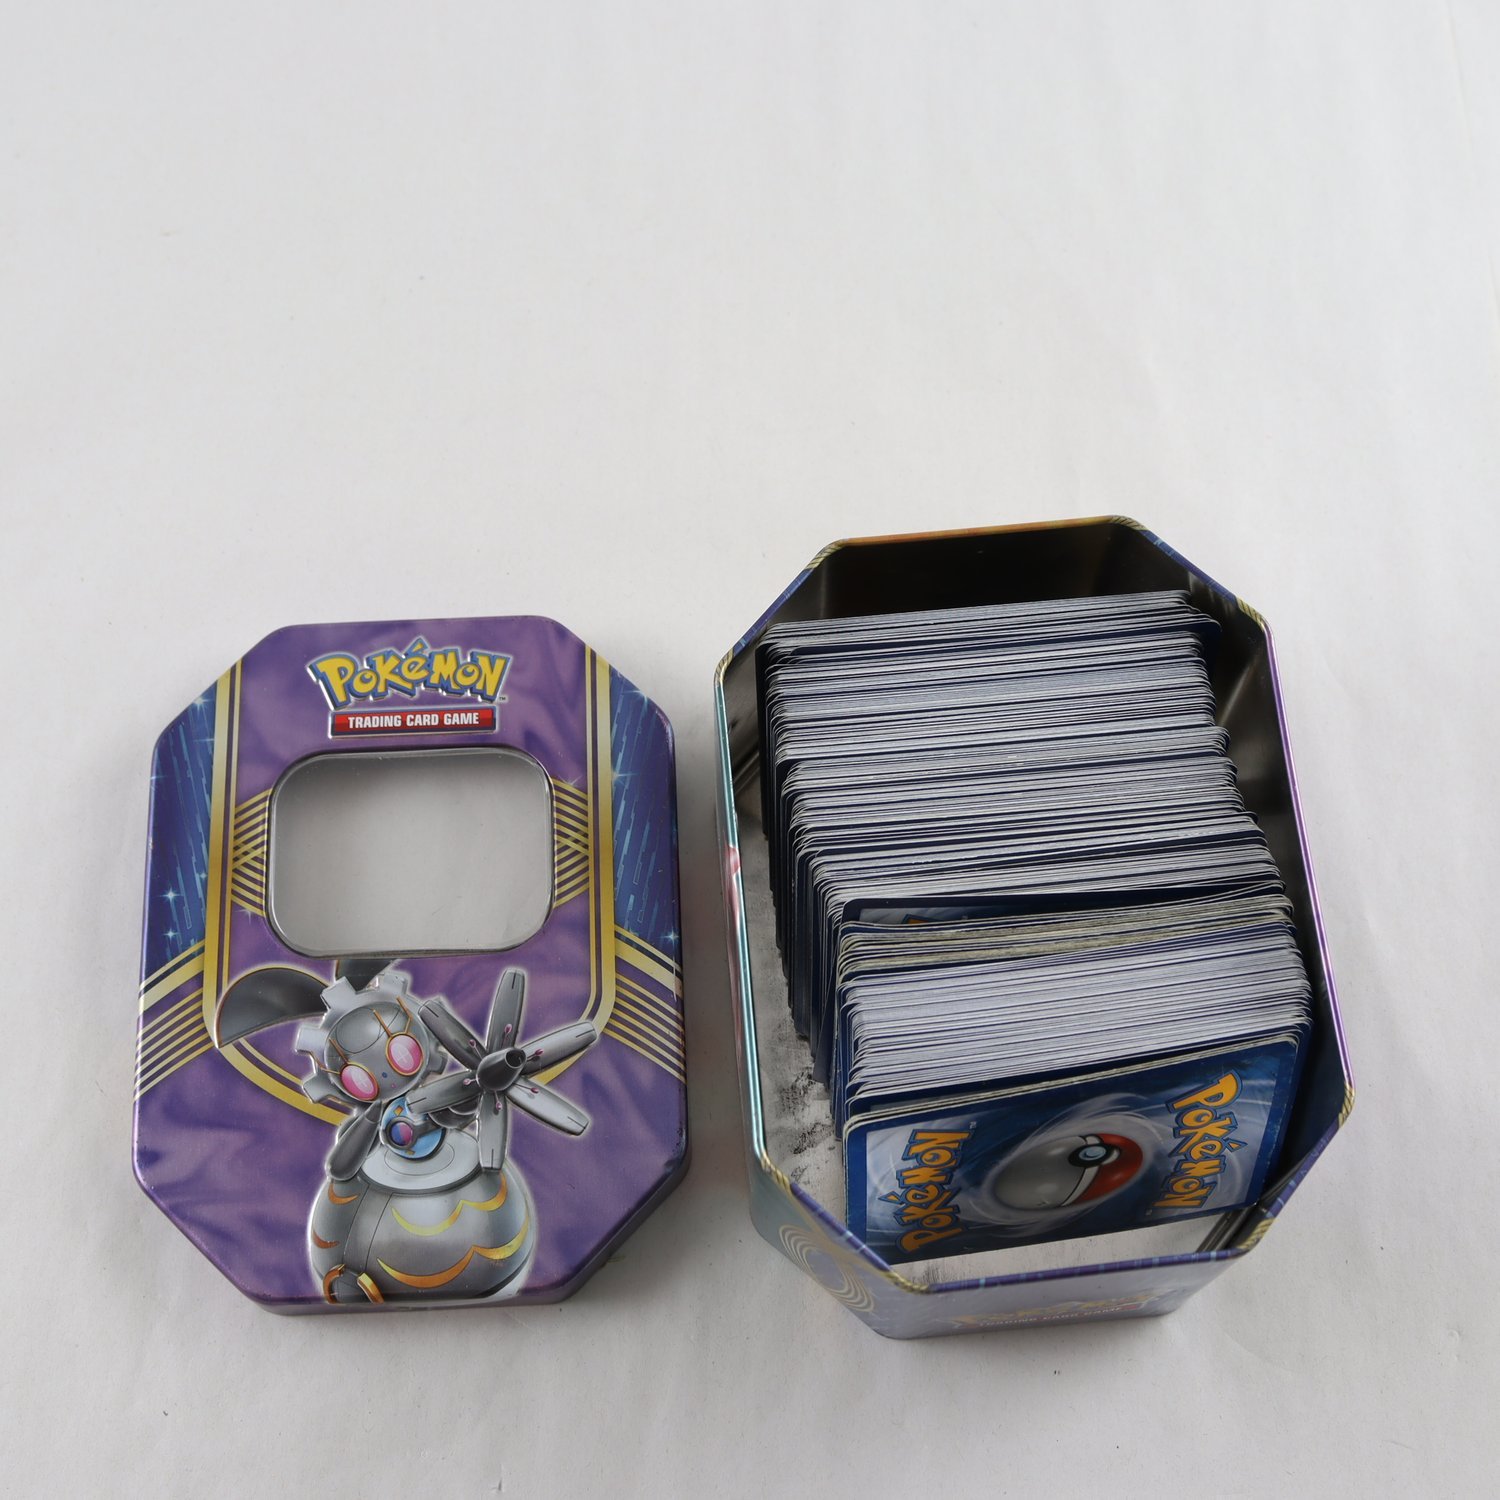 Kort, Pokemonkort, blandat i ask.